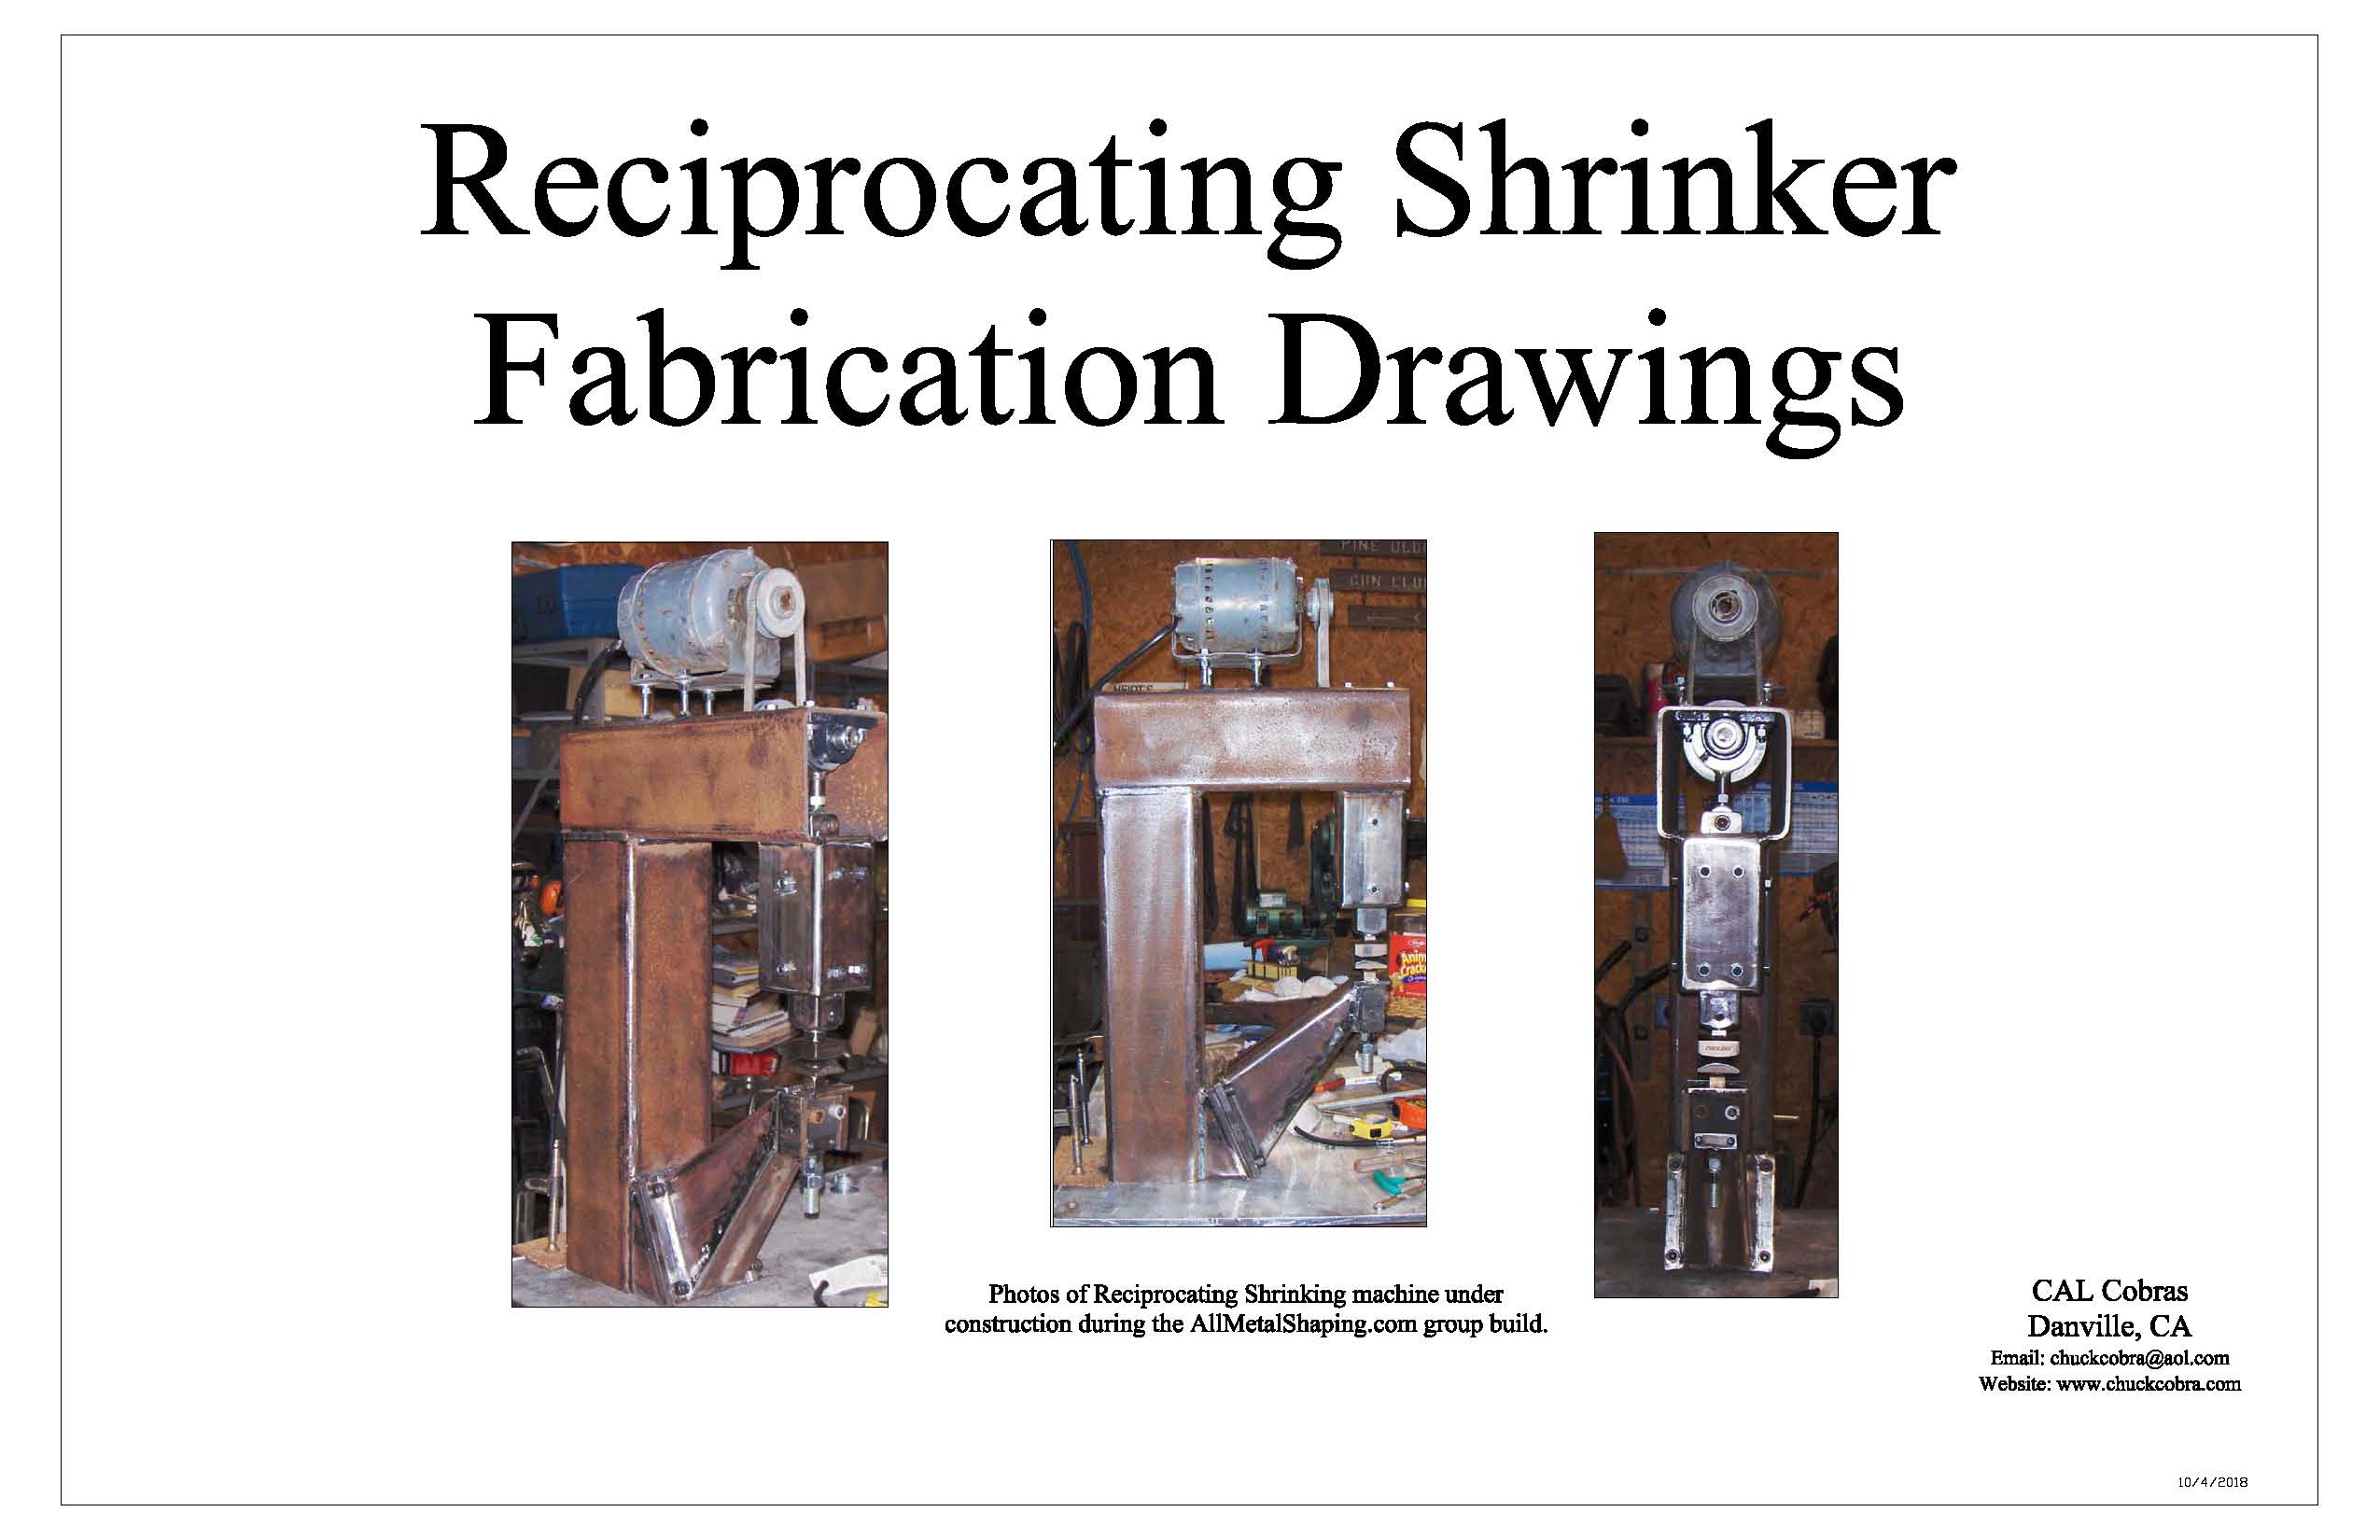 Recipricating Shrinking machine drawings